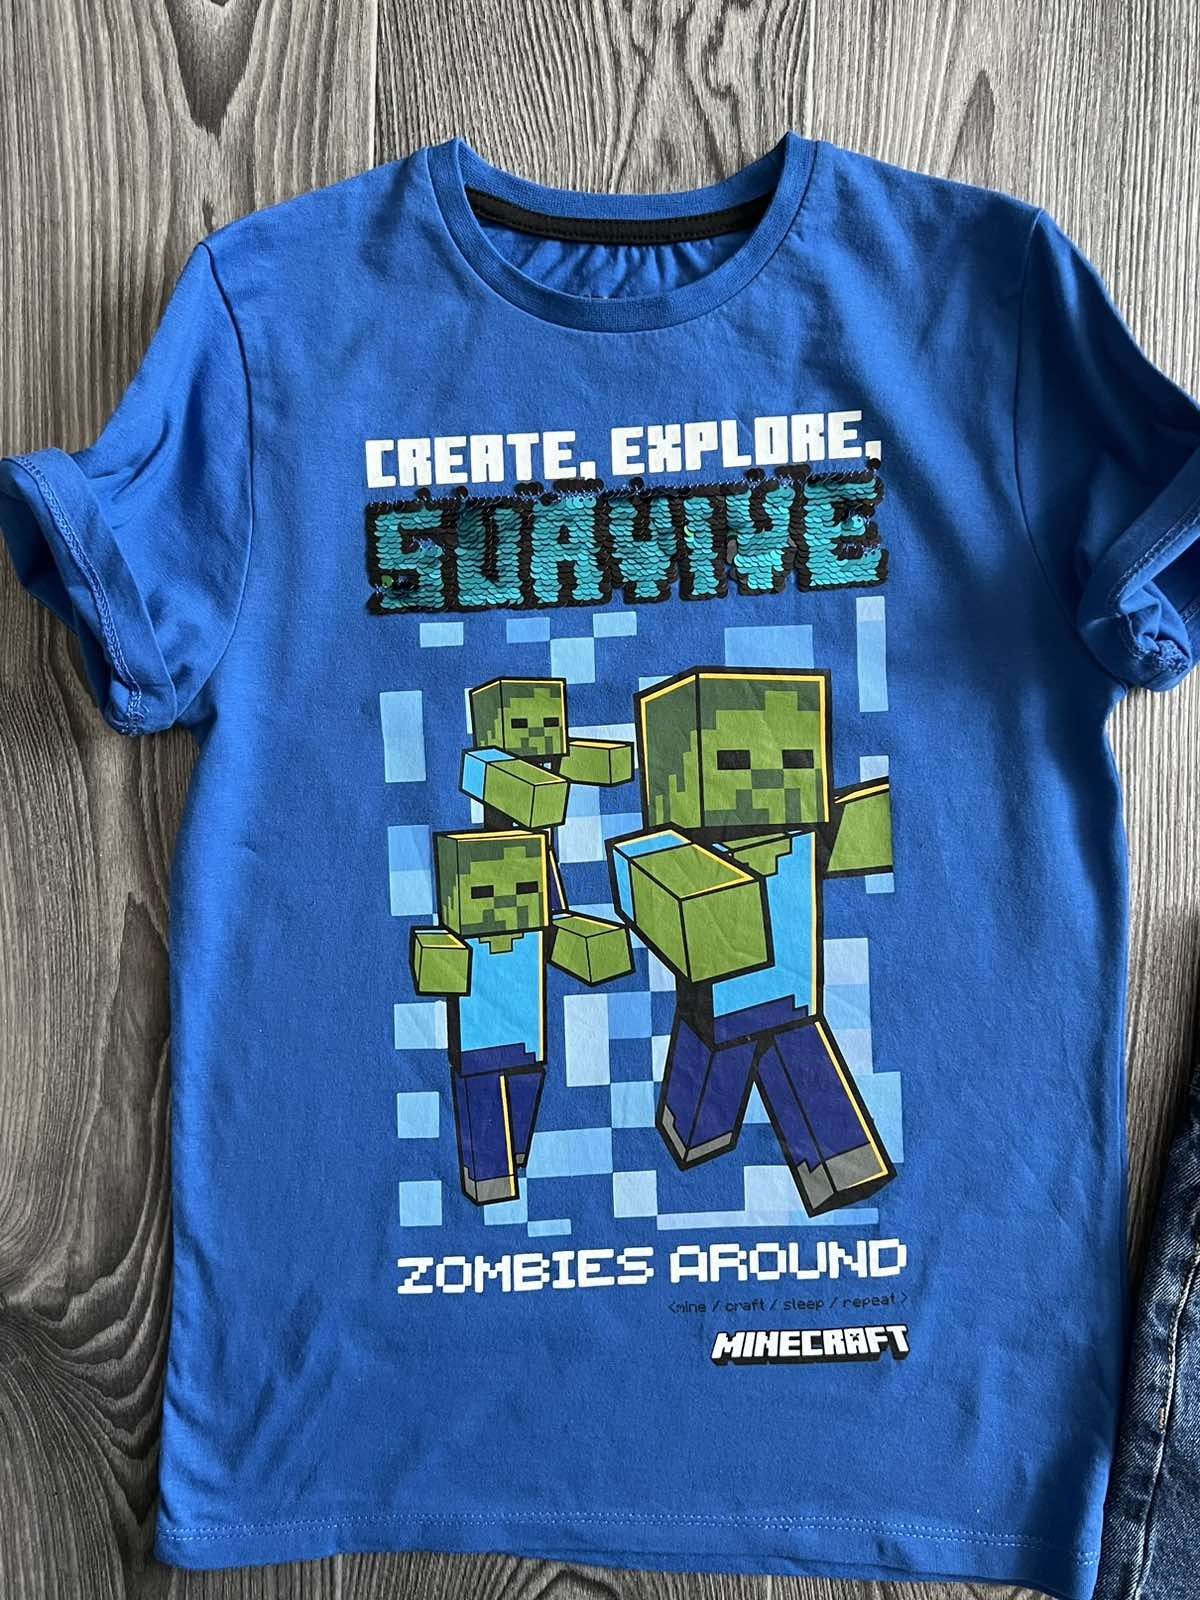 Шорты и футболка Minecraft. Возраст 7 - 8 лет.